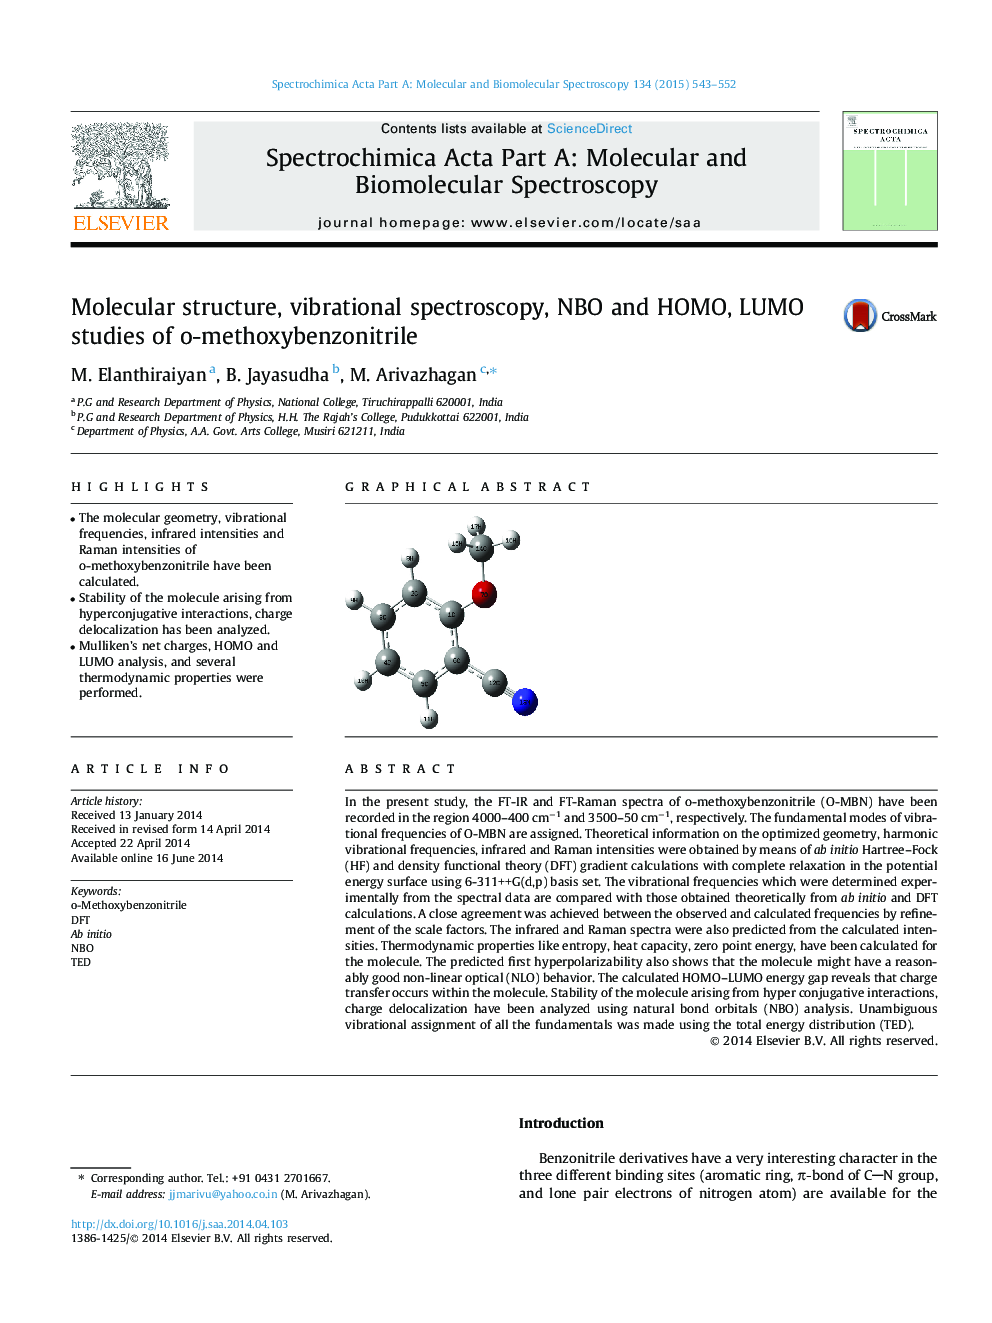 Molecular structure, vibrational spectroscopy, NBO and HOMO, LUMO studies of o-methoxybenzonitrile